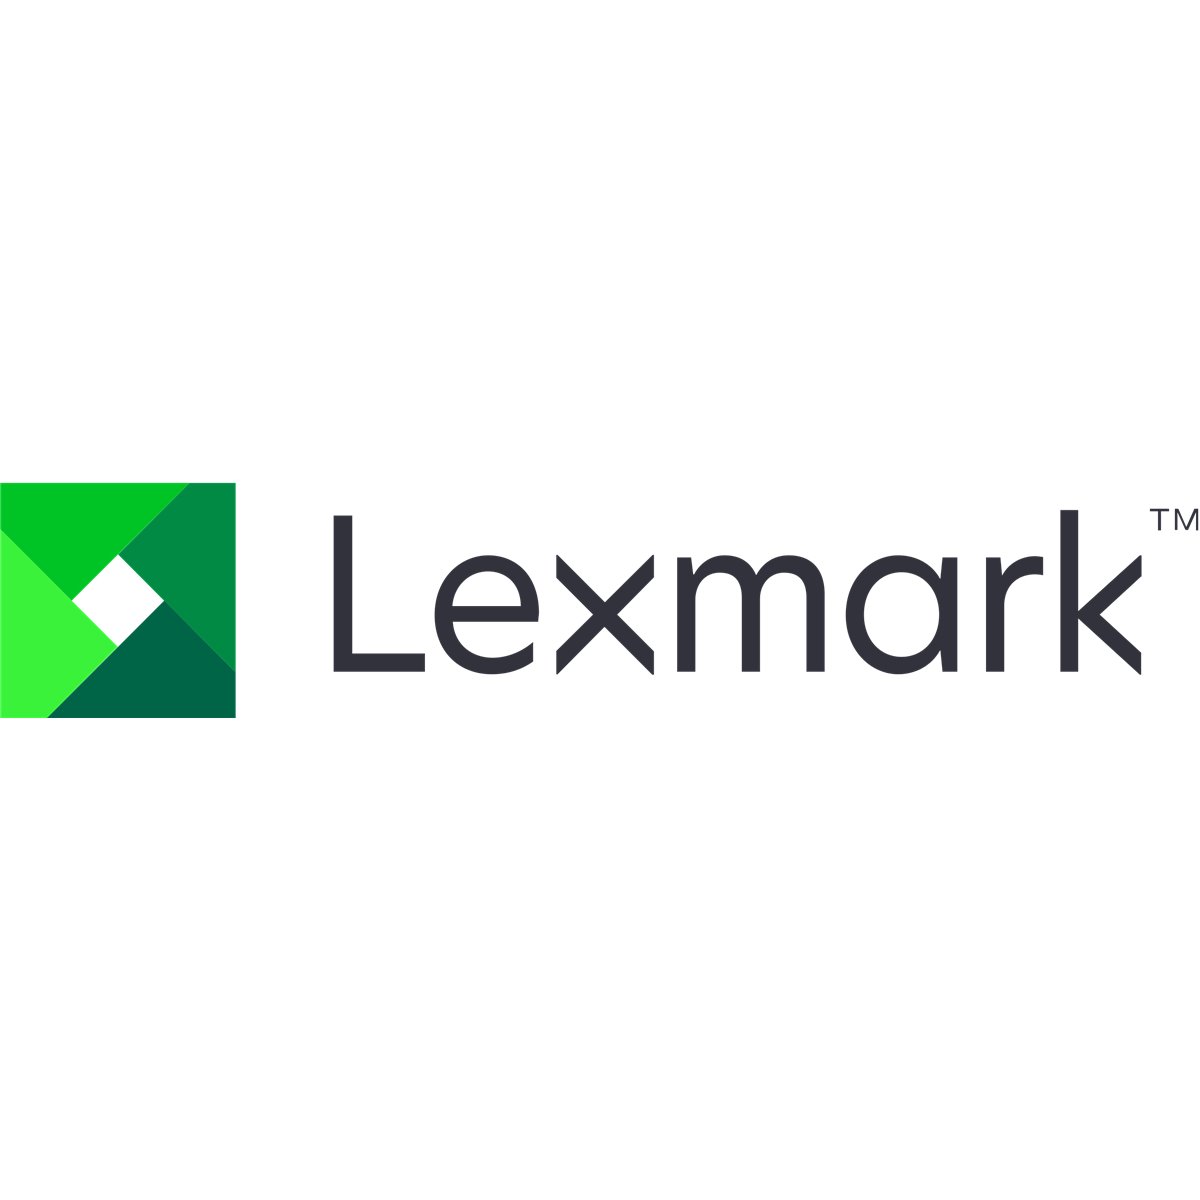 Lexmark MX Skyfall SVC Op panels 4.3 Lcd Touch D